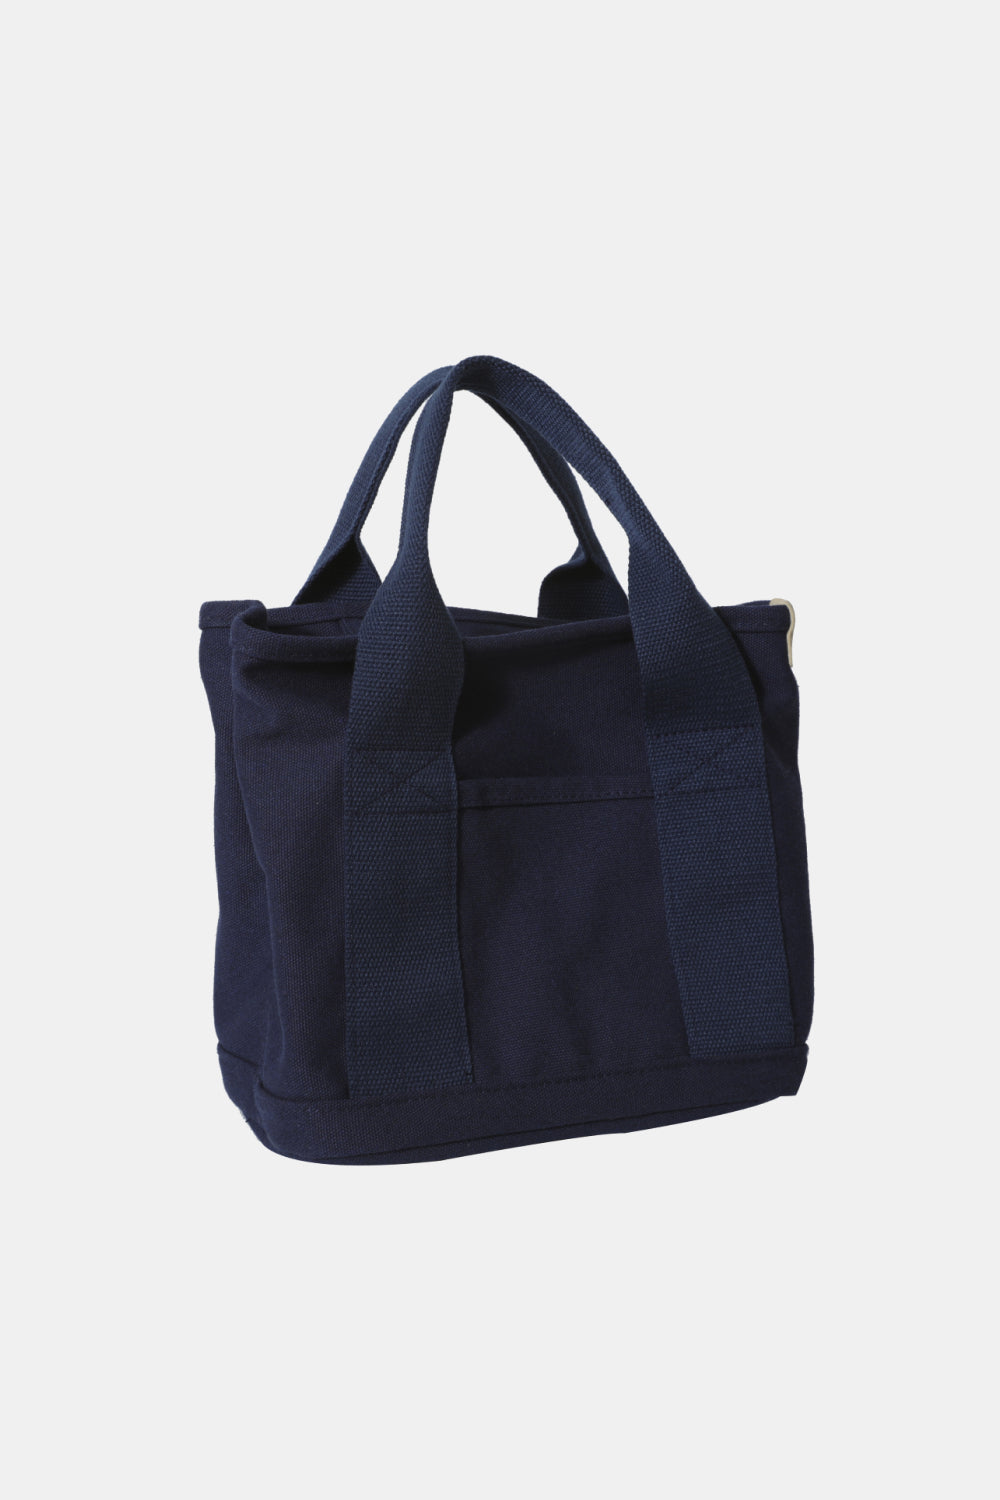 Dark Slate Gray Small Canvas Handbag Sentient Beauty Fashions Apparel & Accessories